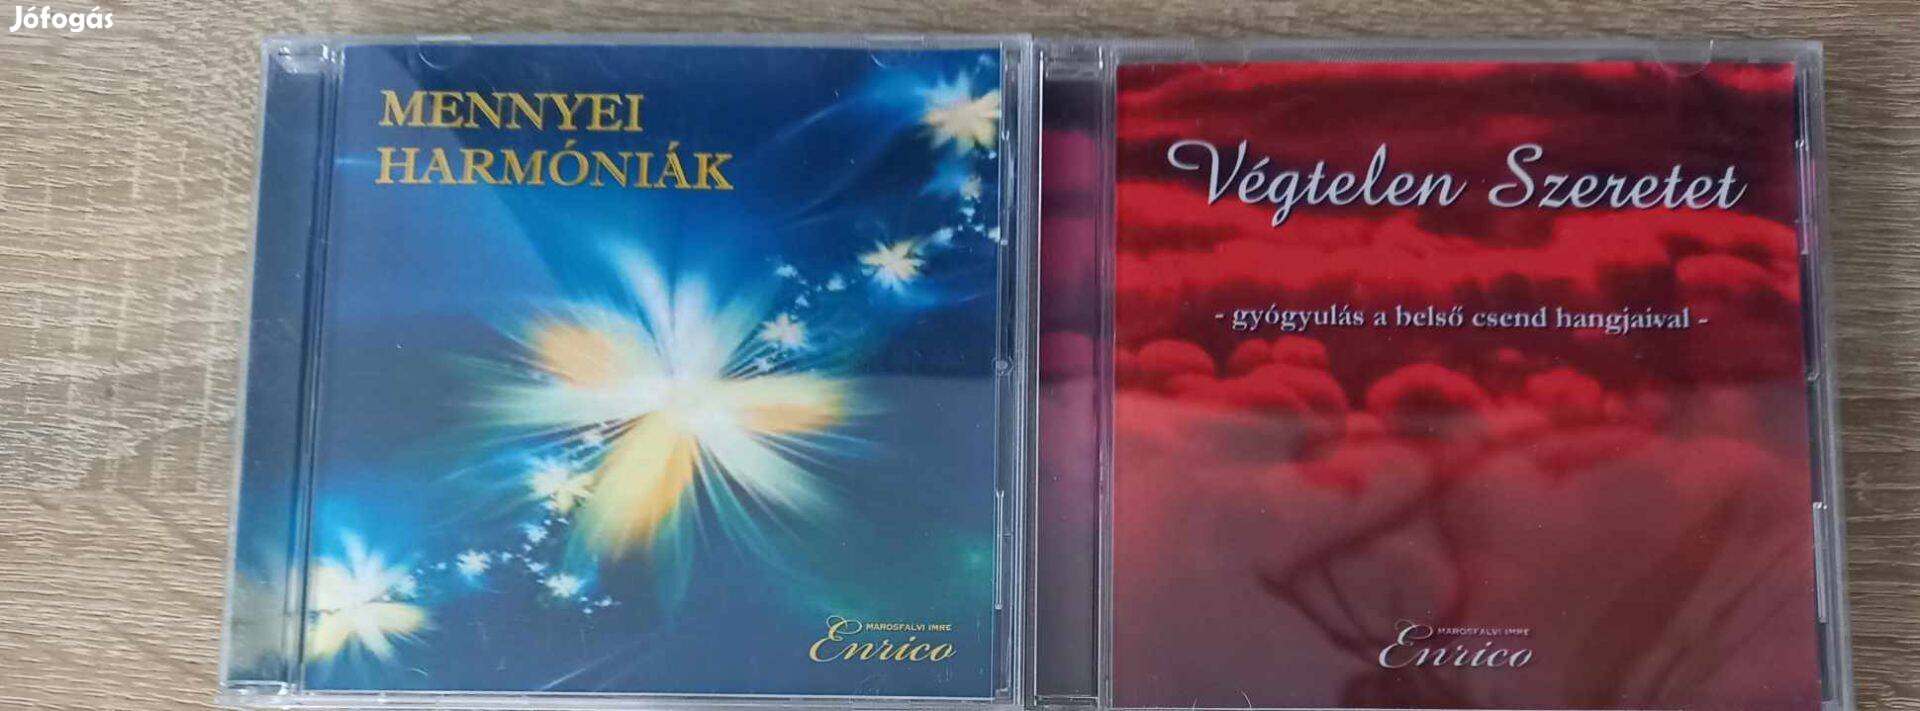 Marosfalvi Imre "Enrico" zenei cd eladó